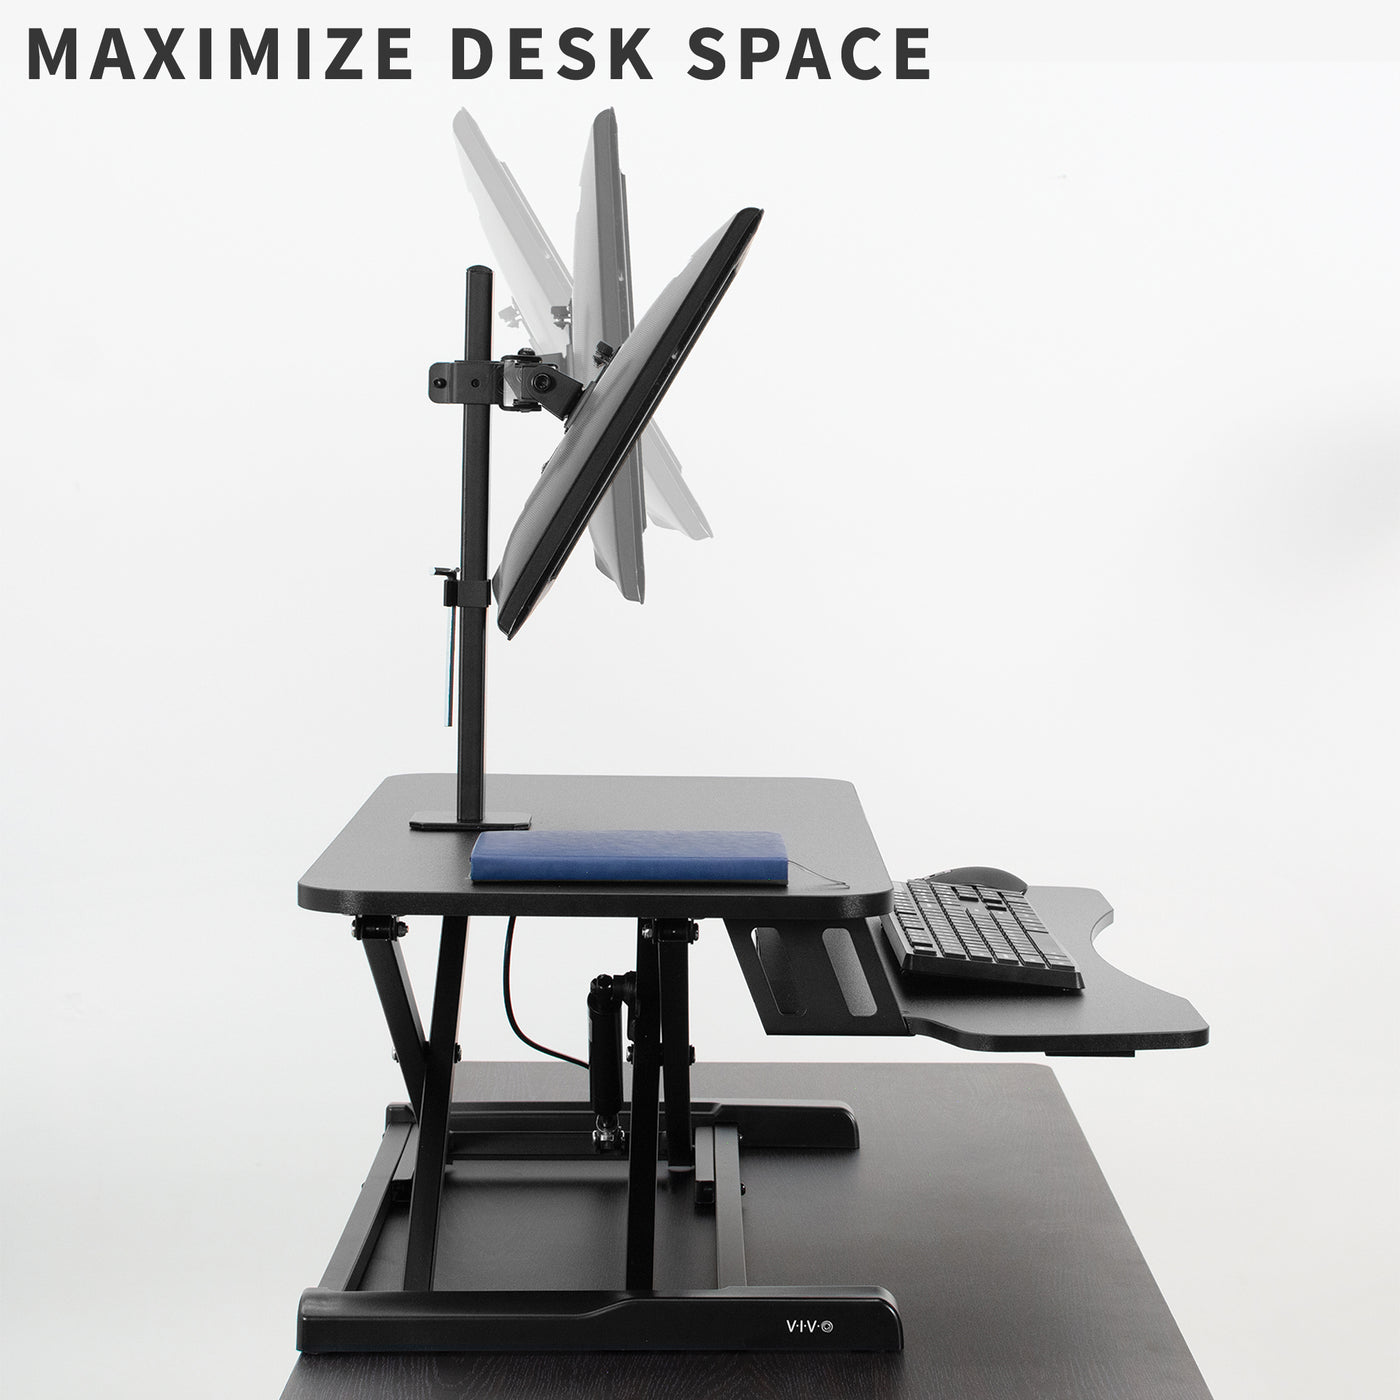 Maximize desk space with an ergonomic tabletop desk converter.